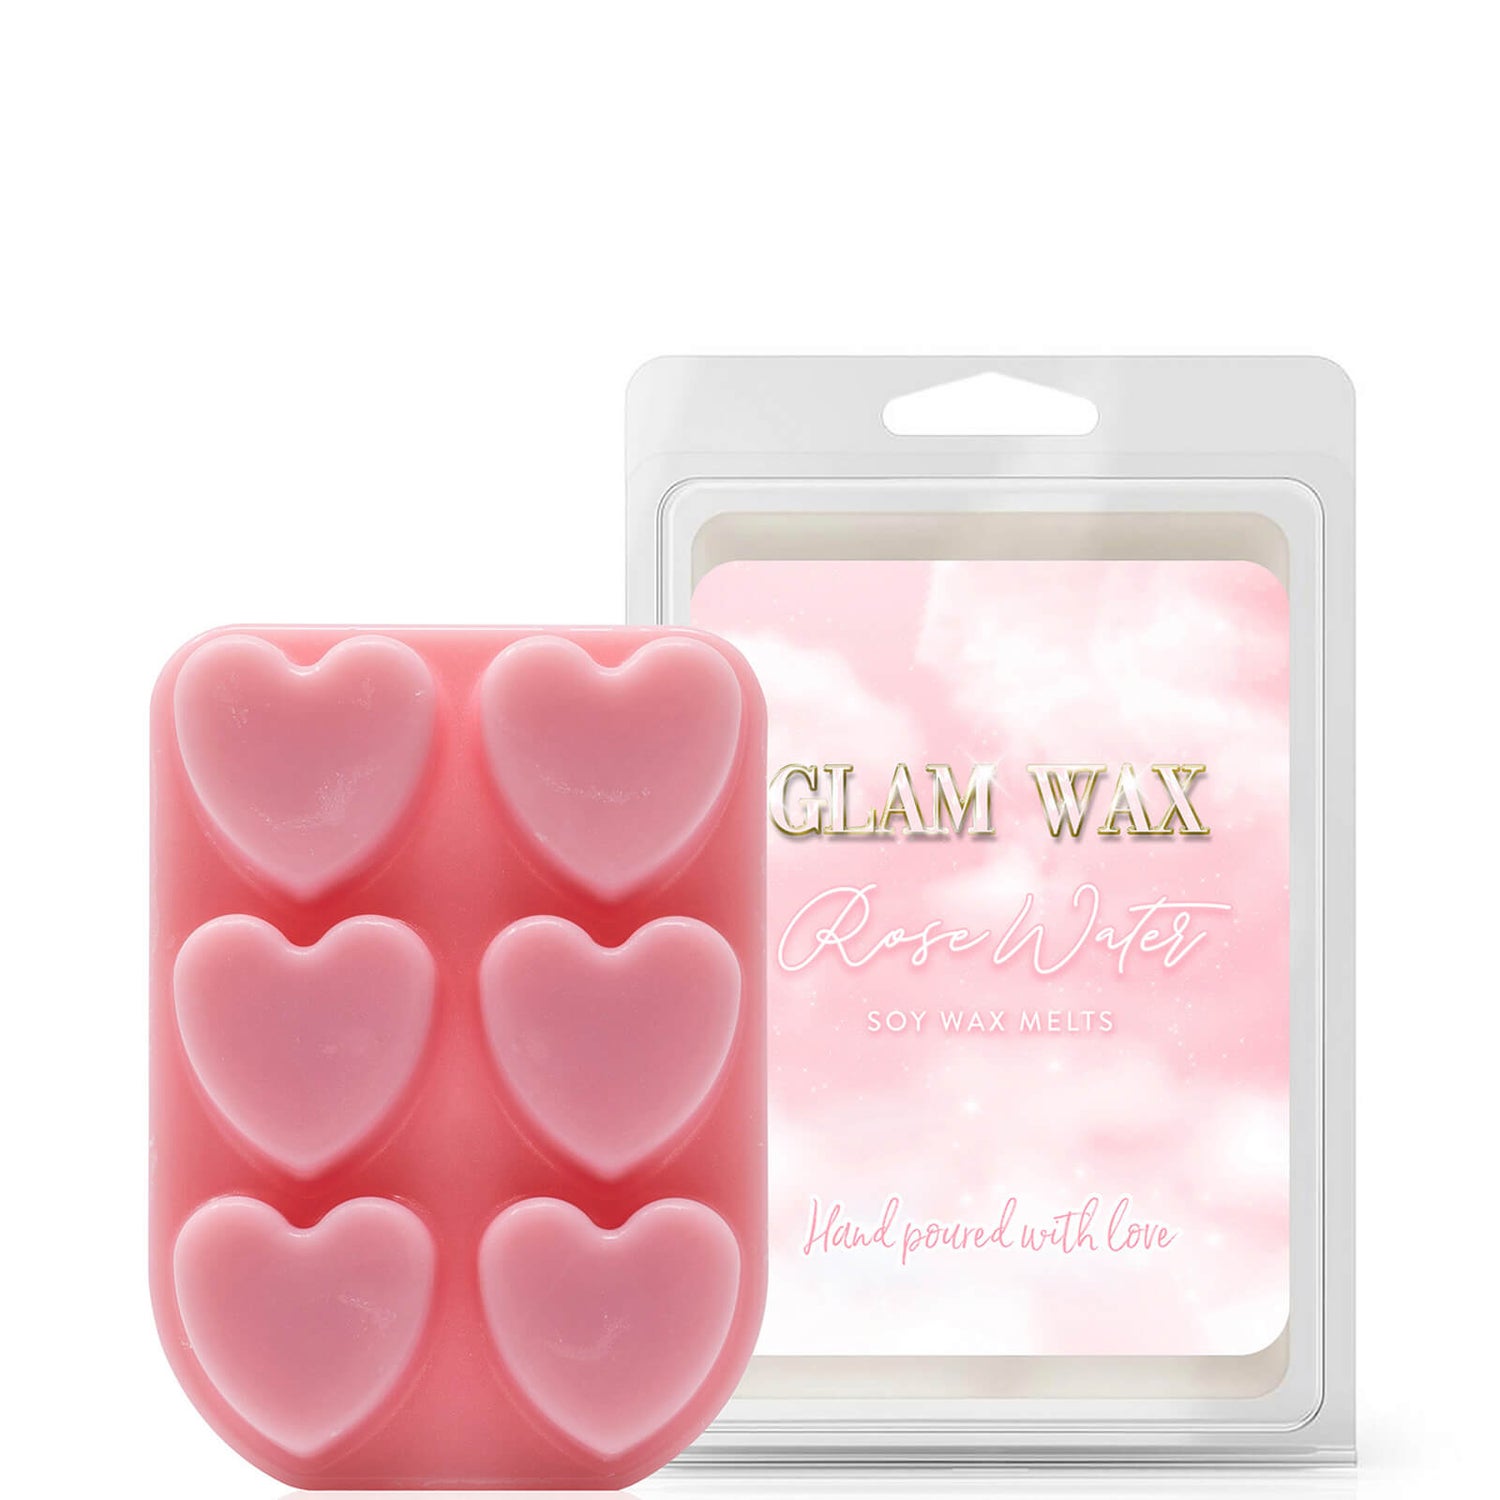 Glam Wax Rose Water Wax Melts 70g